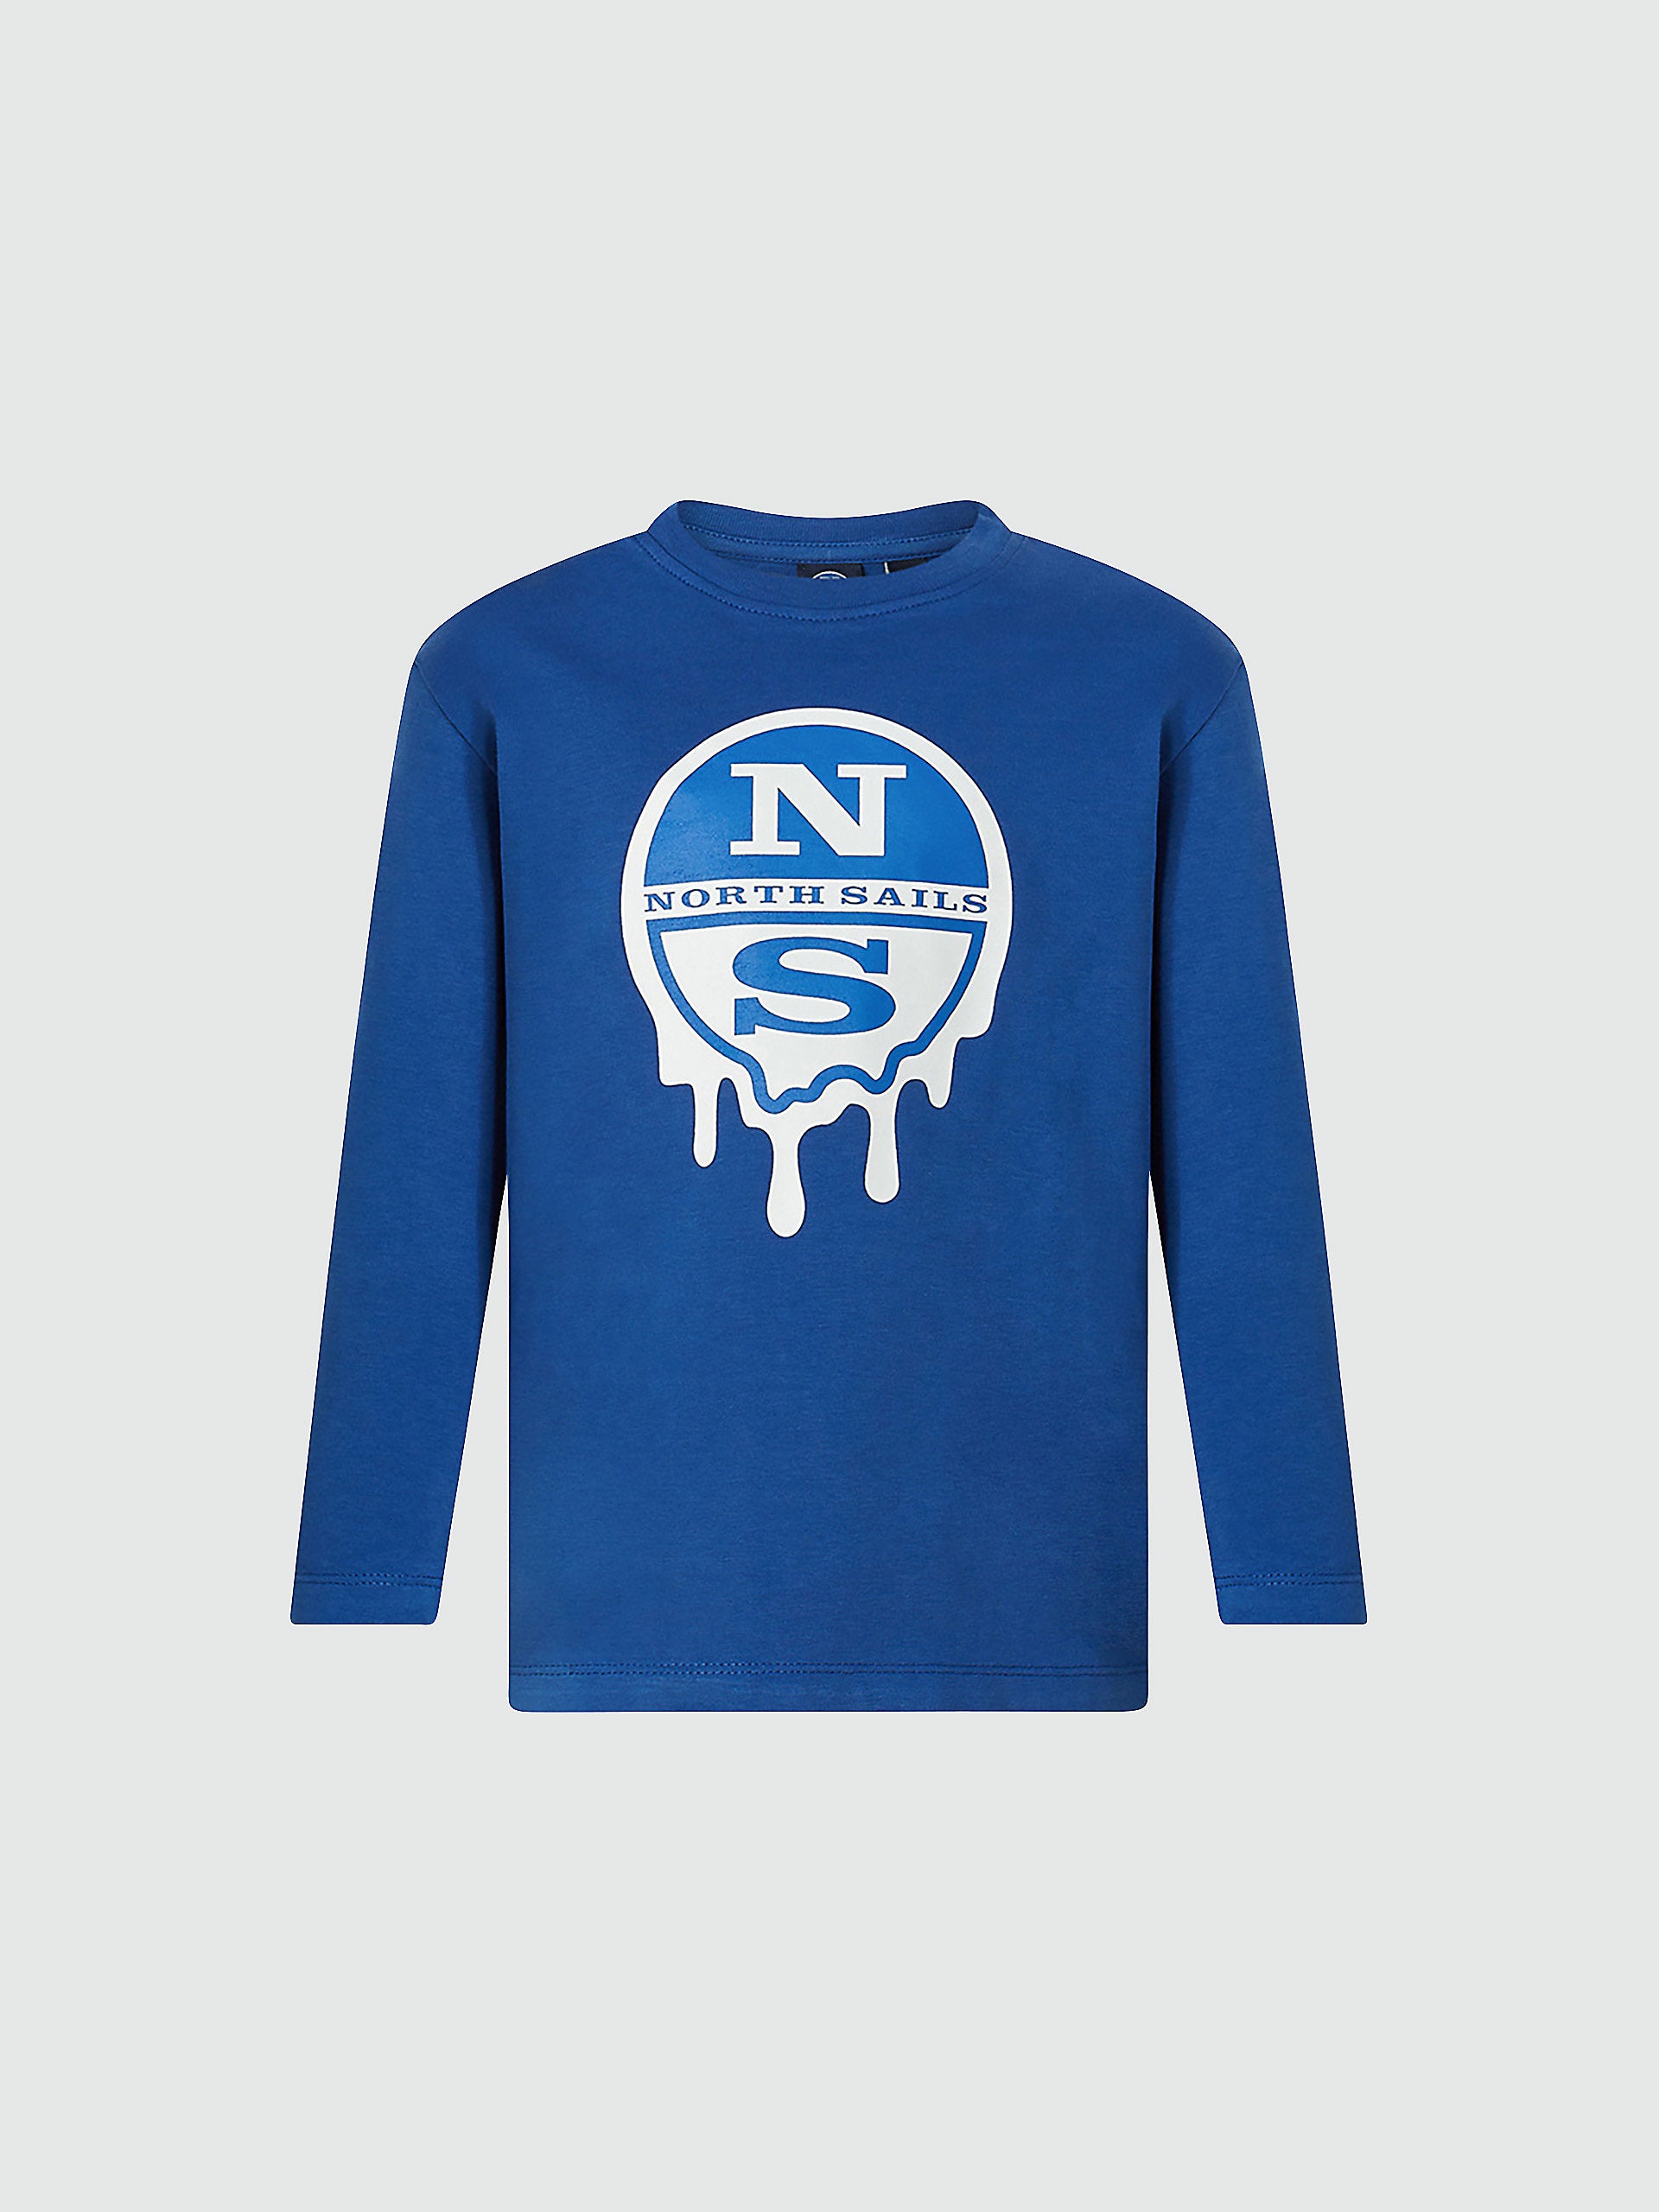 North Sails - T-shirt with maxi logoNorth SailsOcean blue4